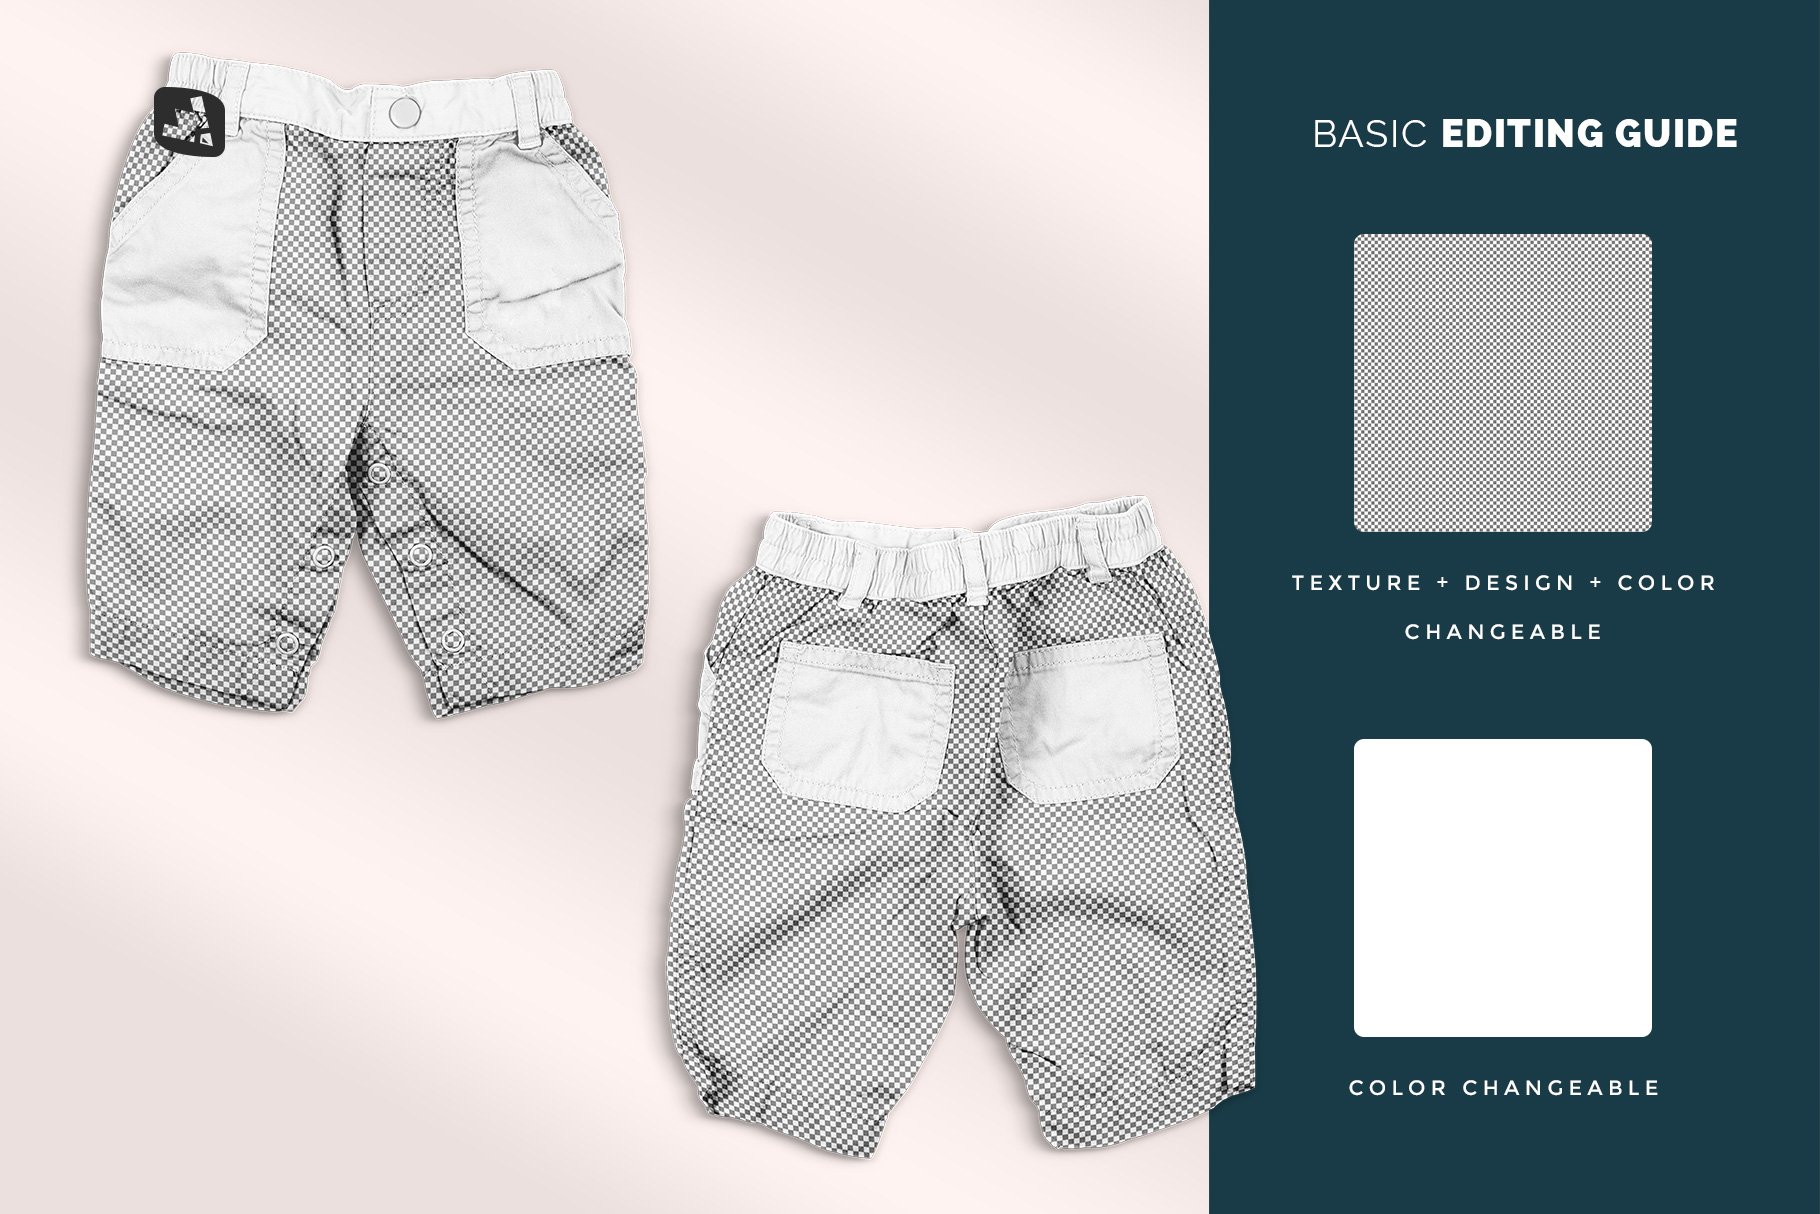 Trendy Infant Cargo Pants Mockup